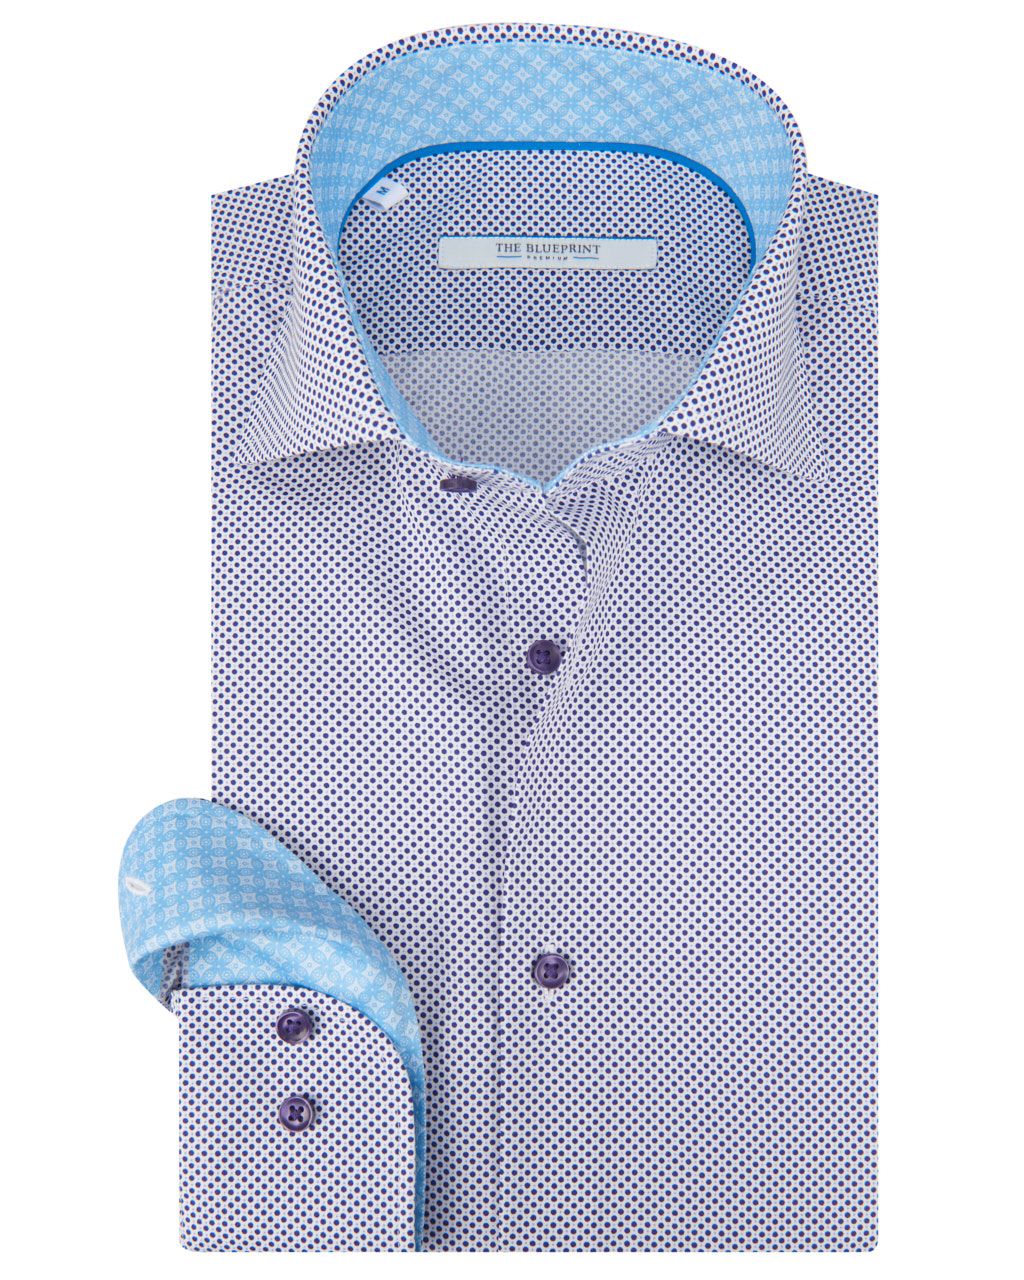 The BLUEPRINT Premium Trendy overhemd LM Donkerblauw print 061891-001-L